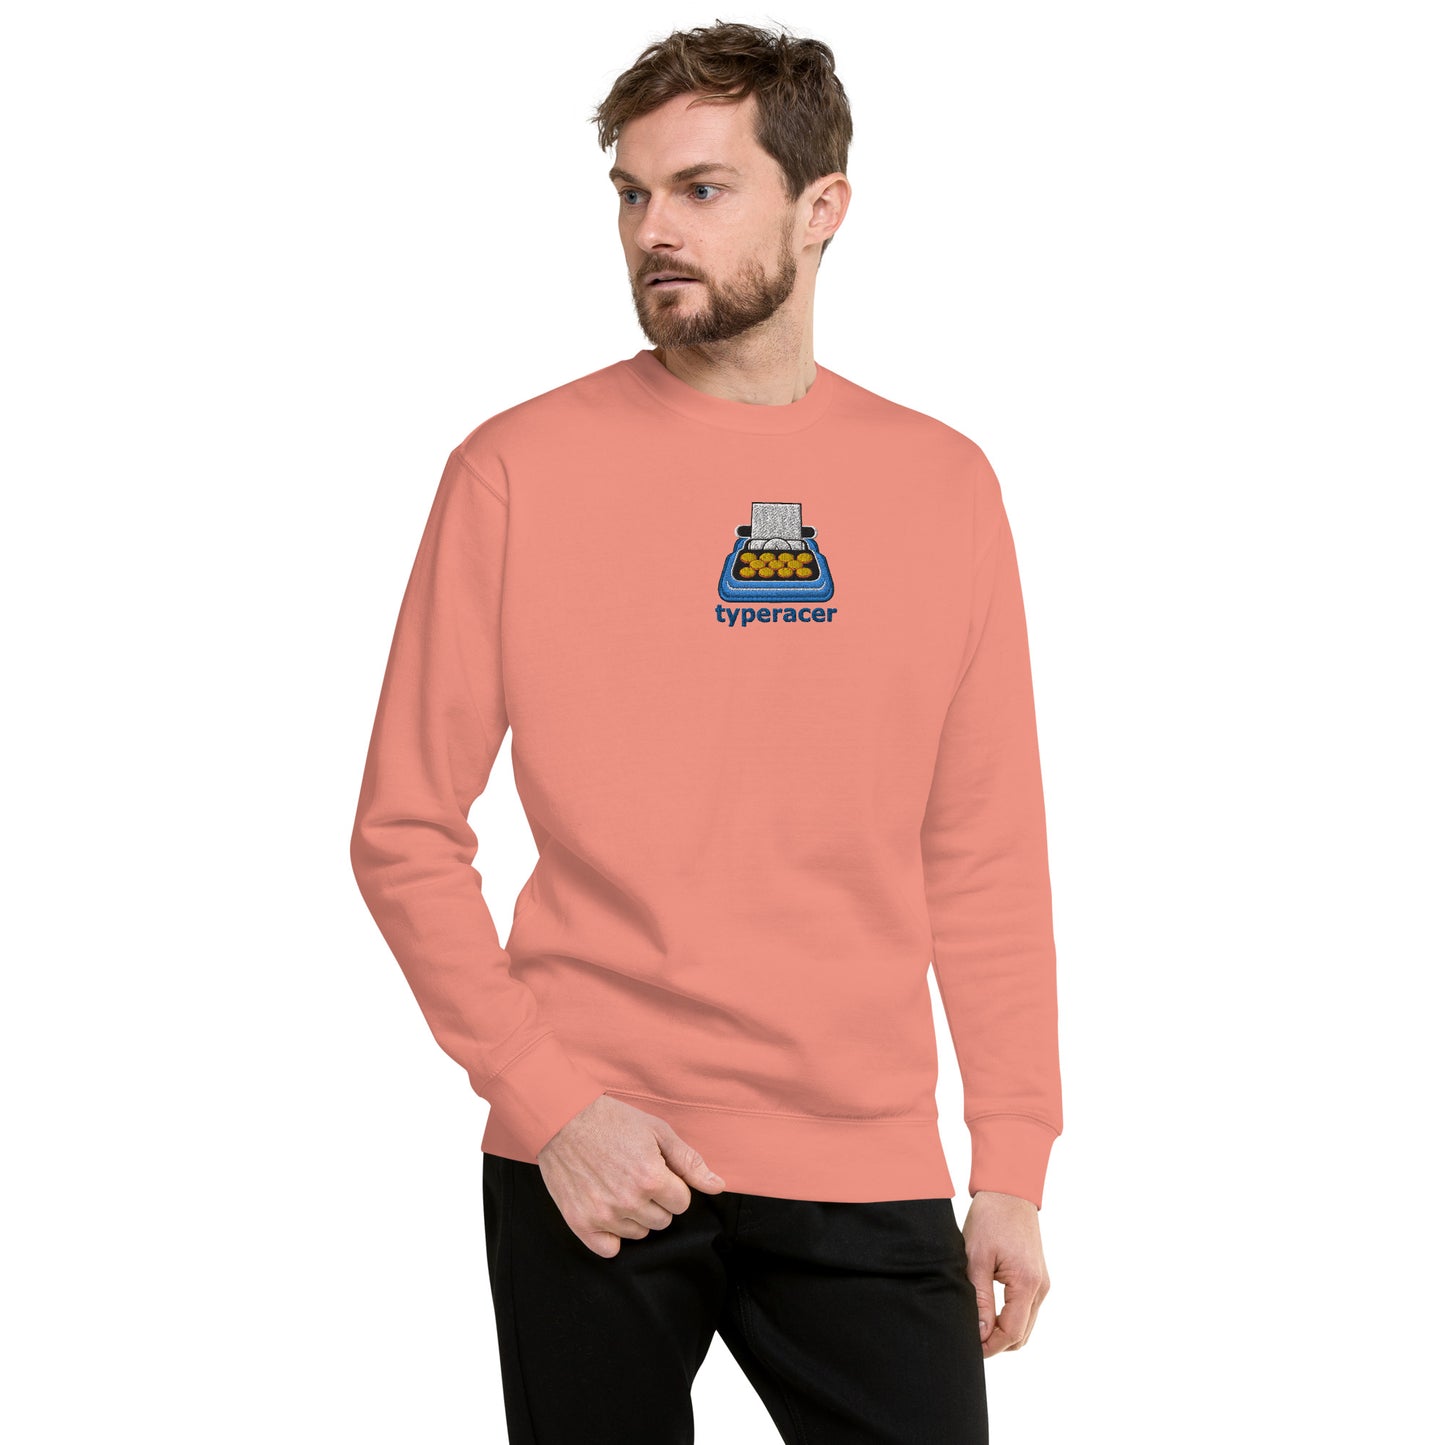 Typeracer logo unisex premium sweatshirt